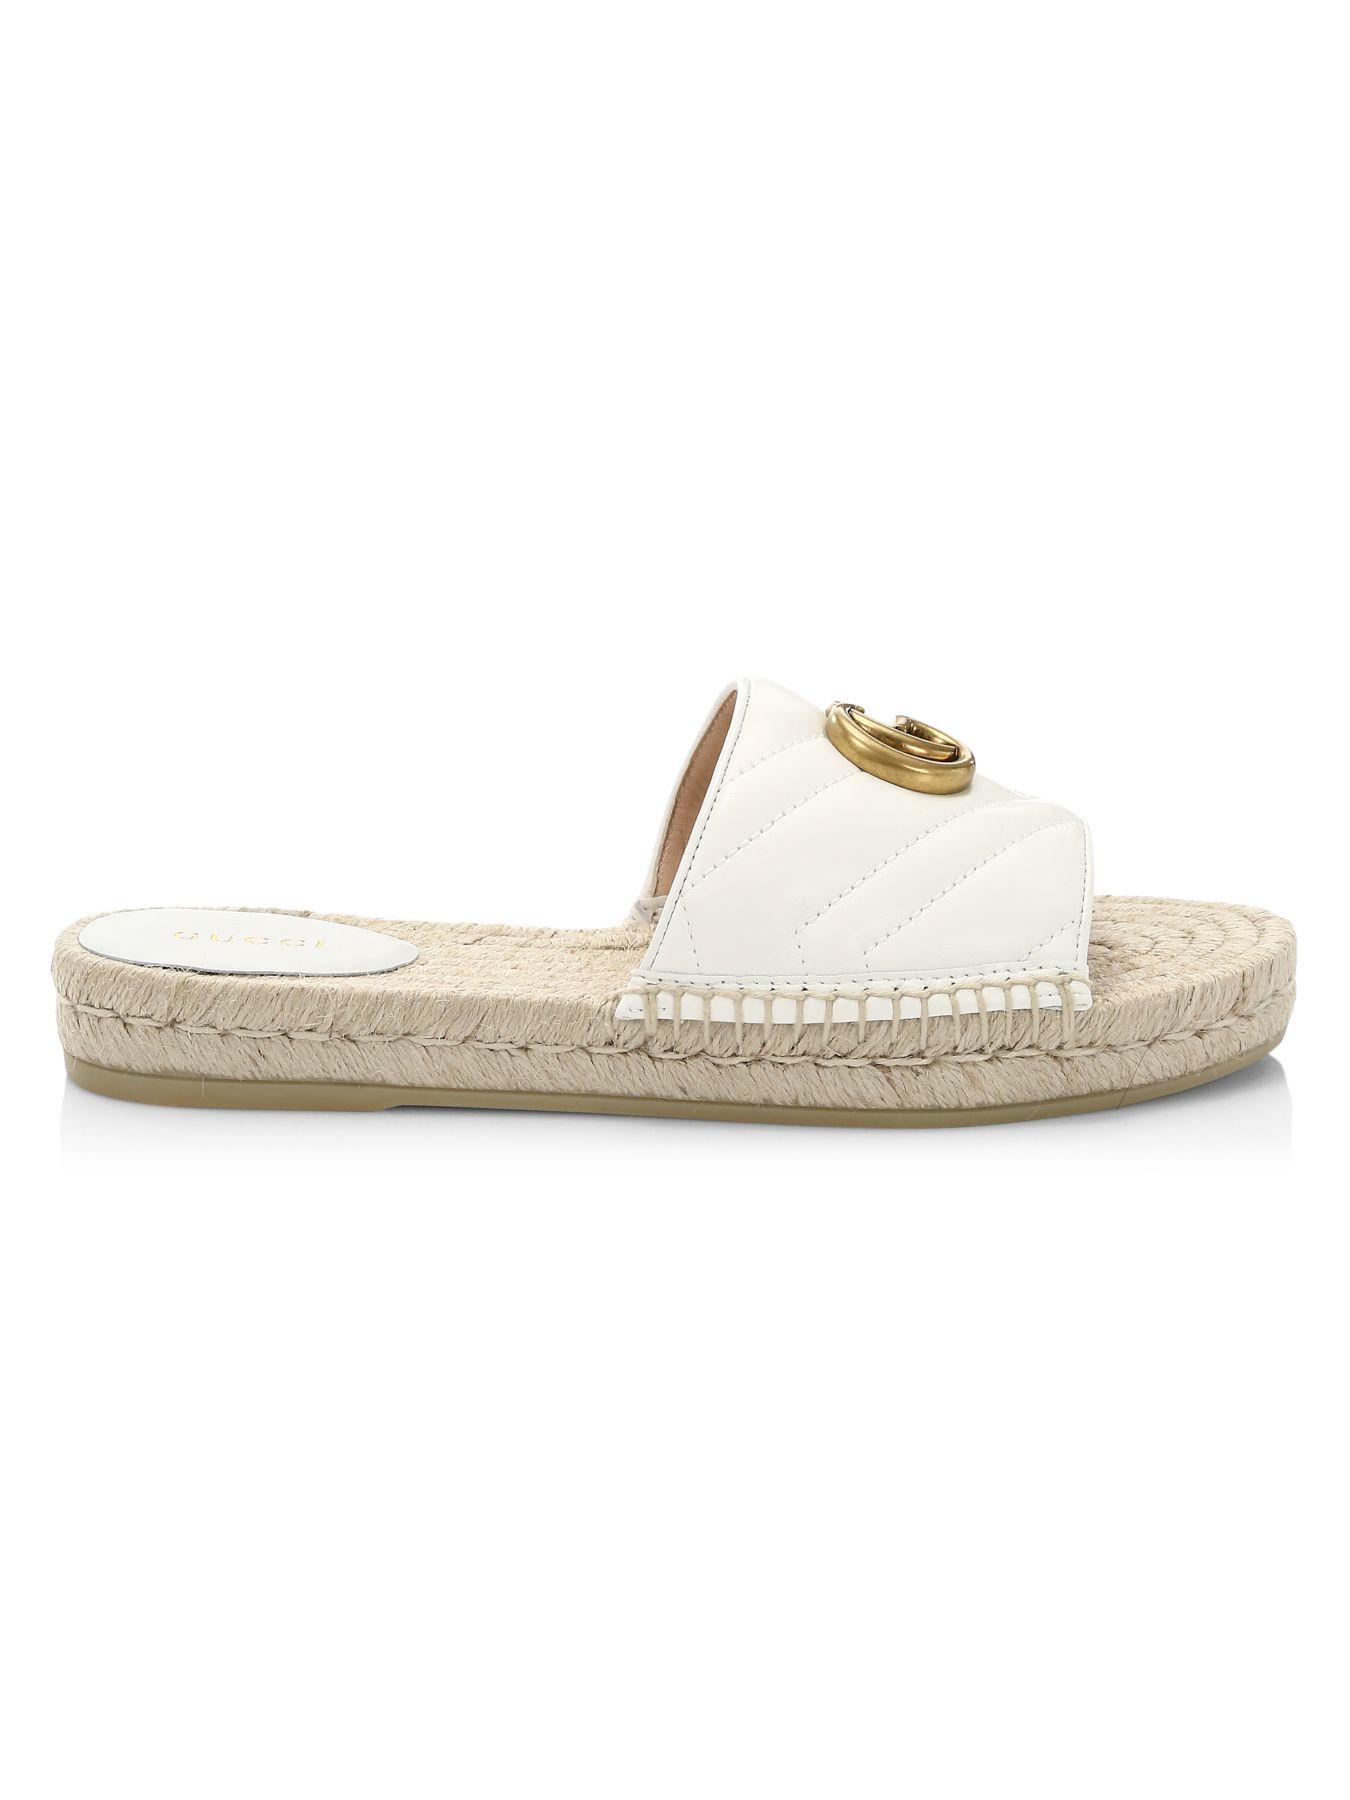 Gucci Pilar Flatform Leather Sandals in White - Lyst